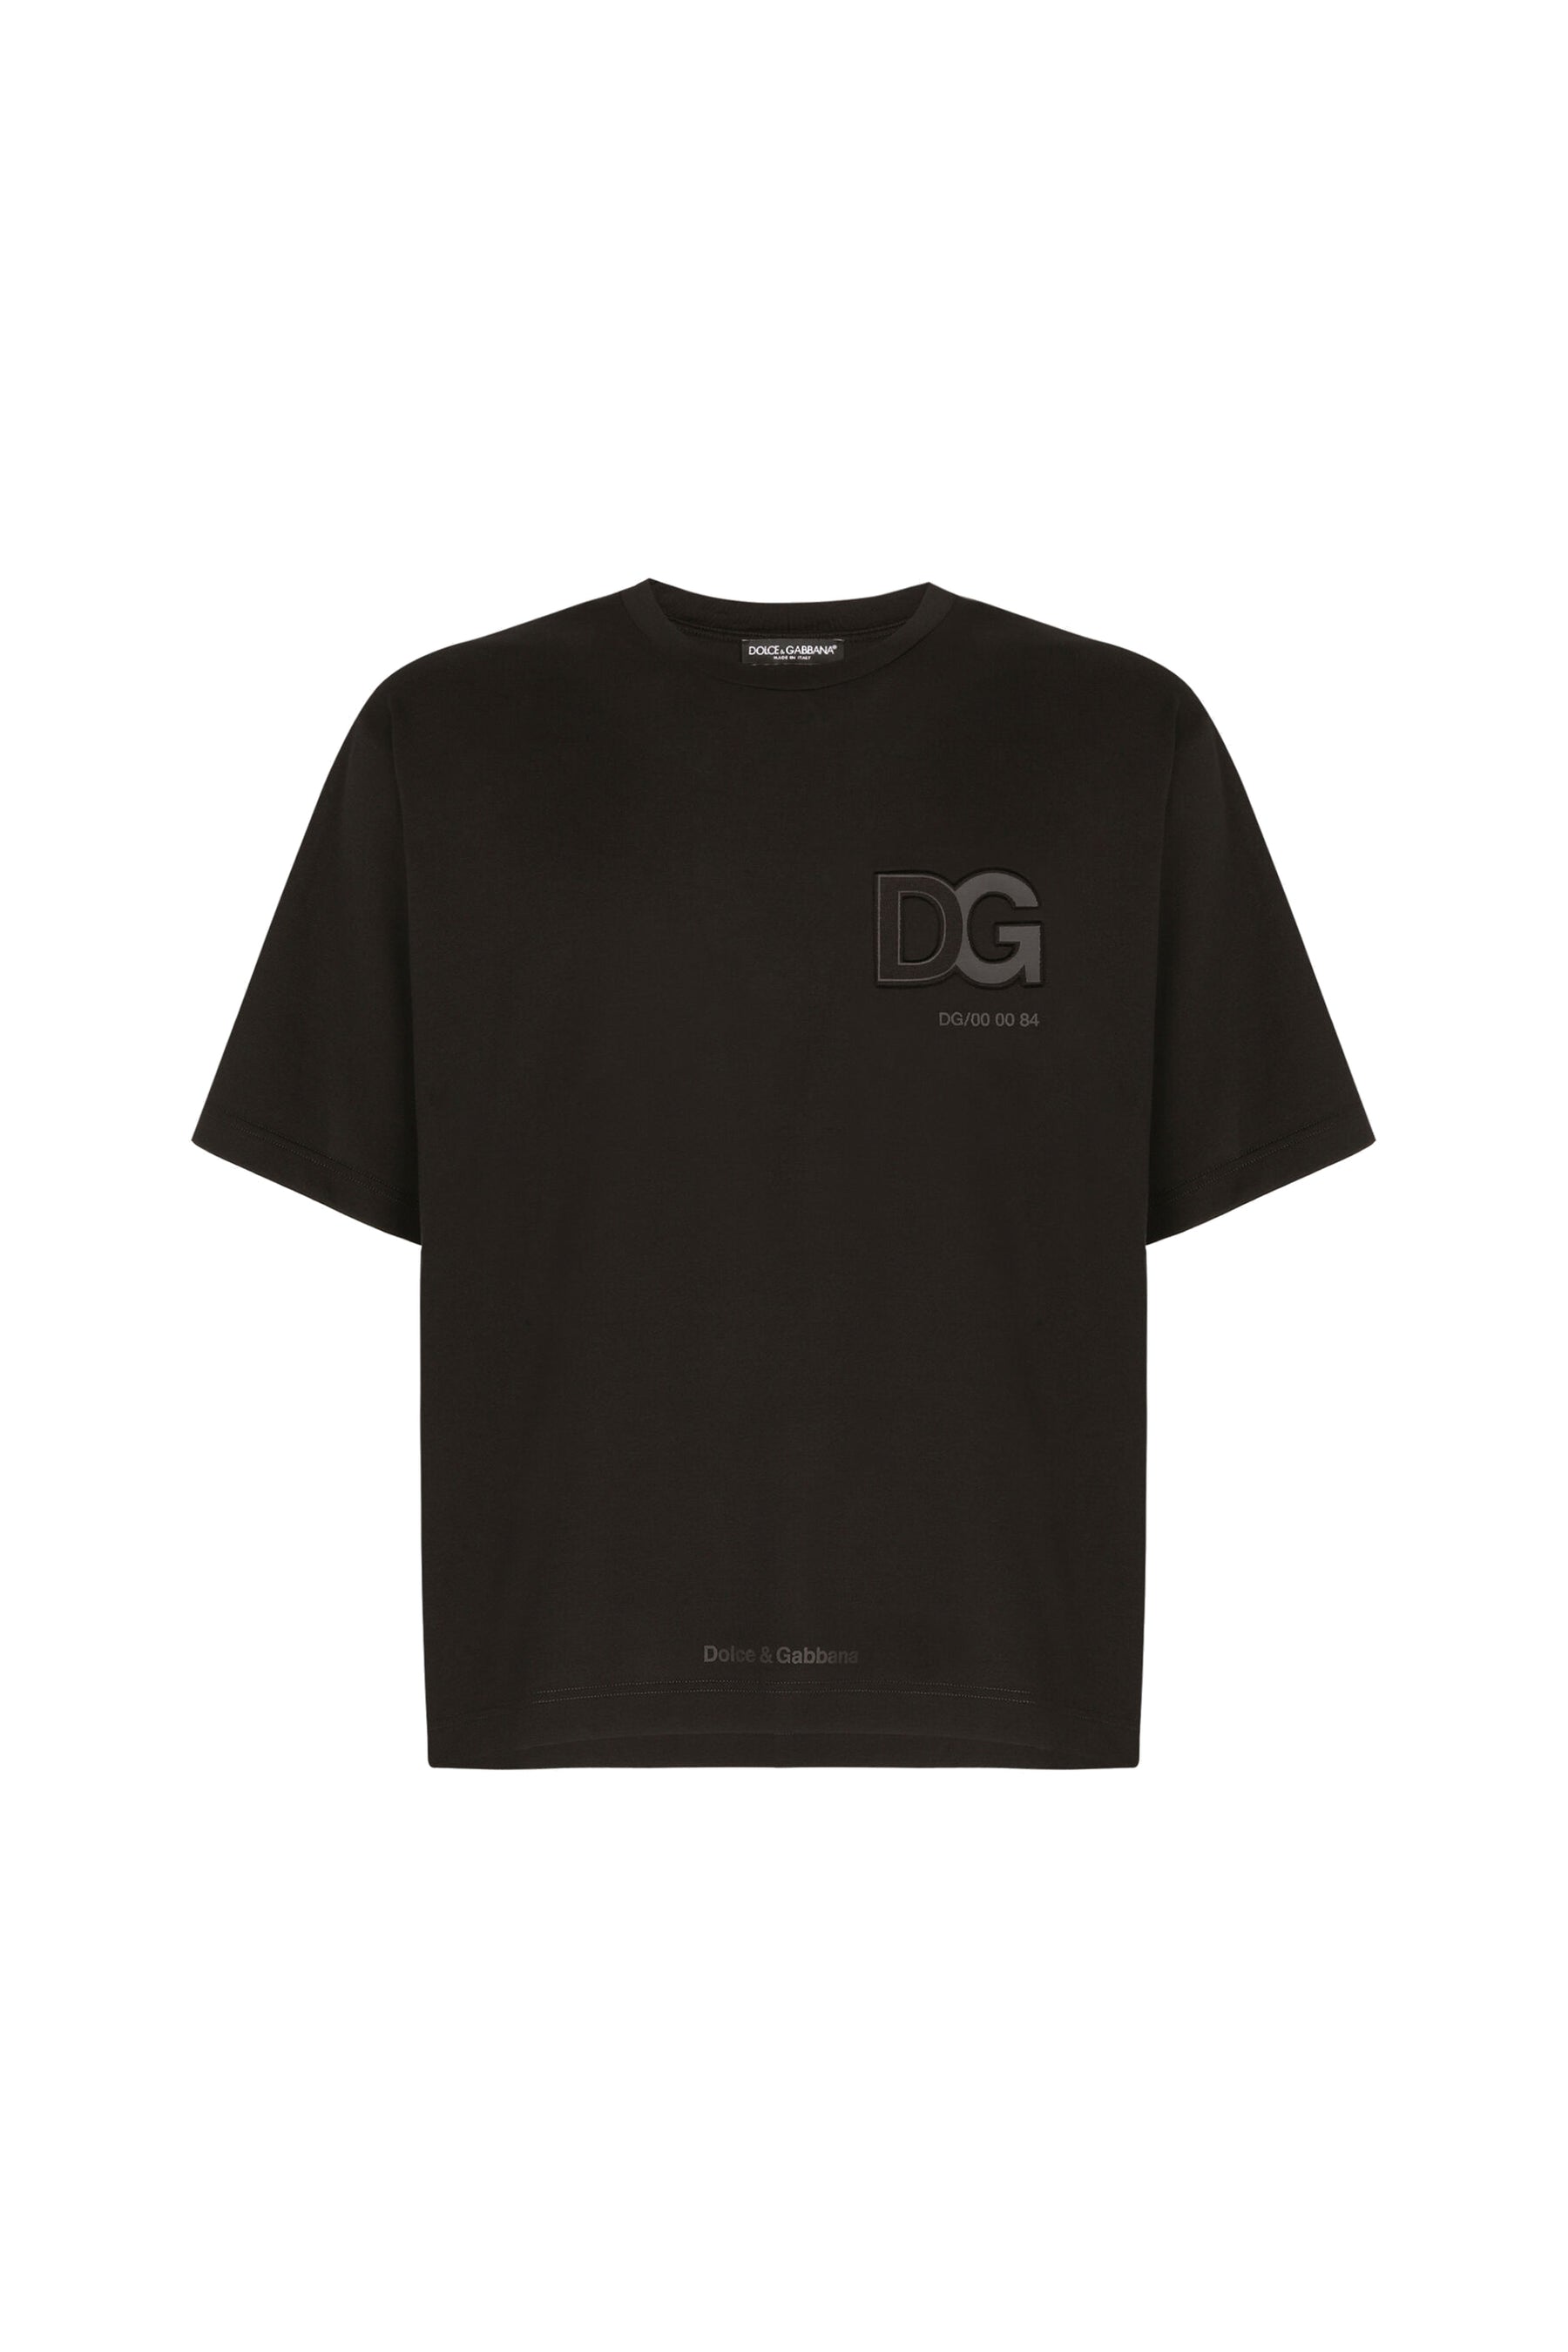 Dolce & Gabbana logo-embossed Black cotton T-shirt